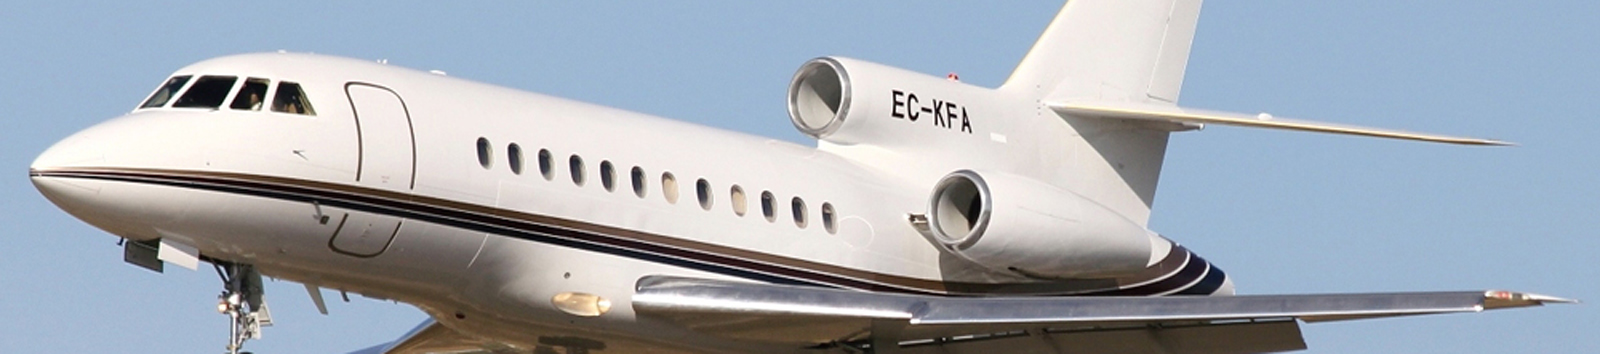 transport-spain-luxury-travel-incoming-dmc-concierge-private-jet